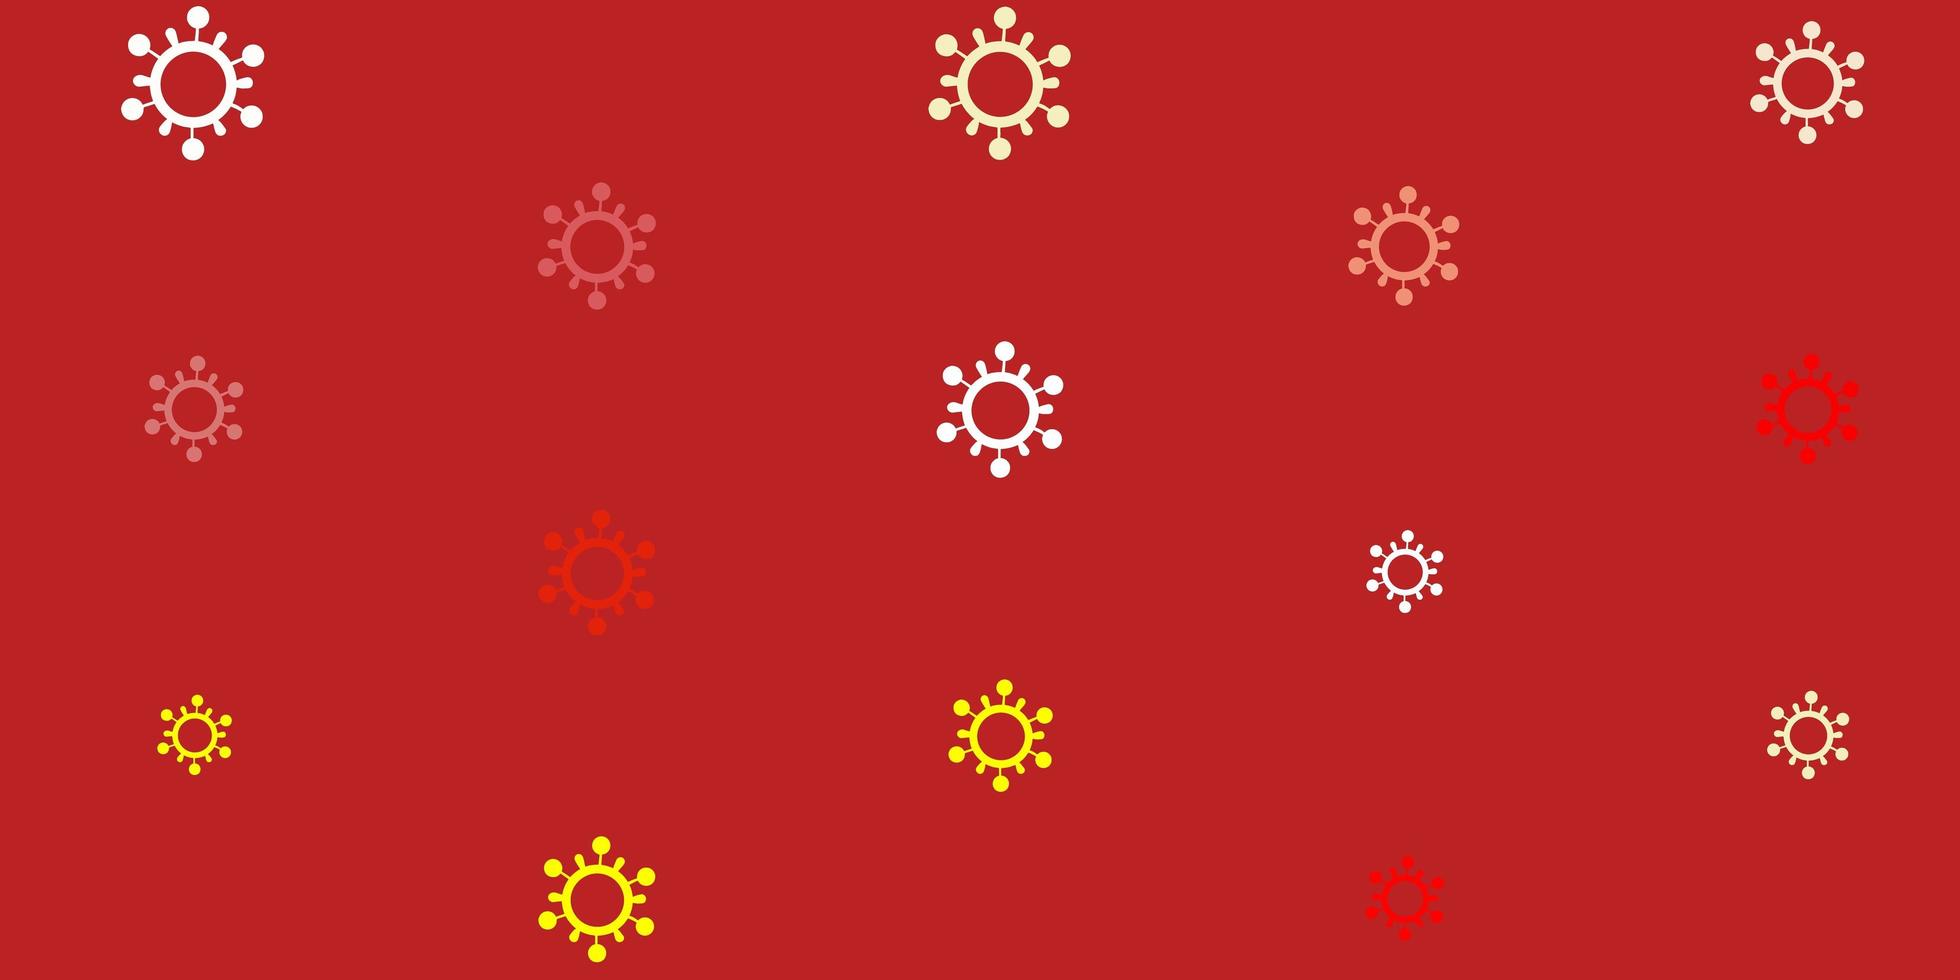 Light Orange vector backdrop with virus symbols